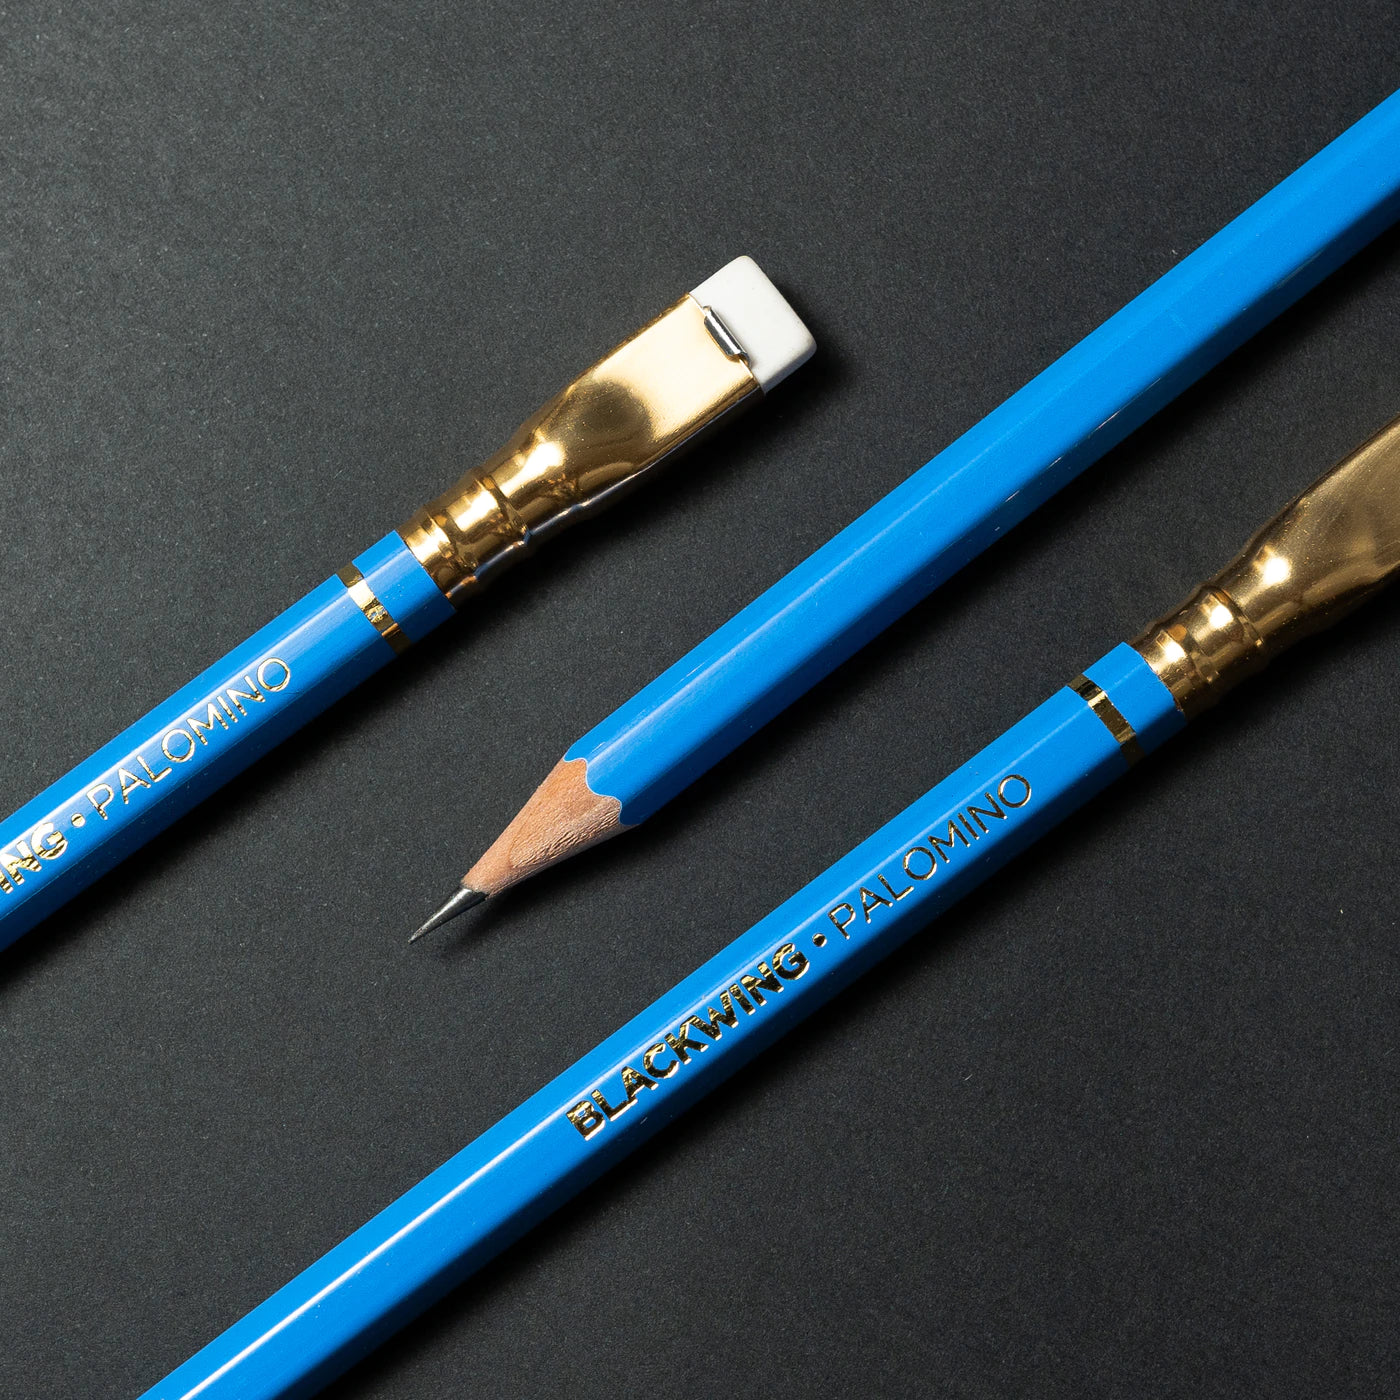 Palomino Special Edition Eras Graphite Pencils - Pack of 12 - Blue